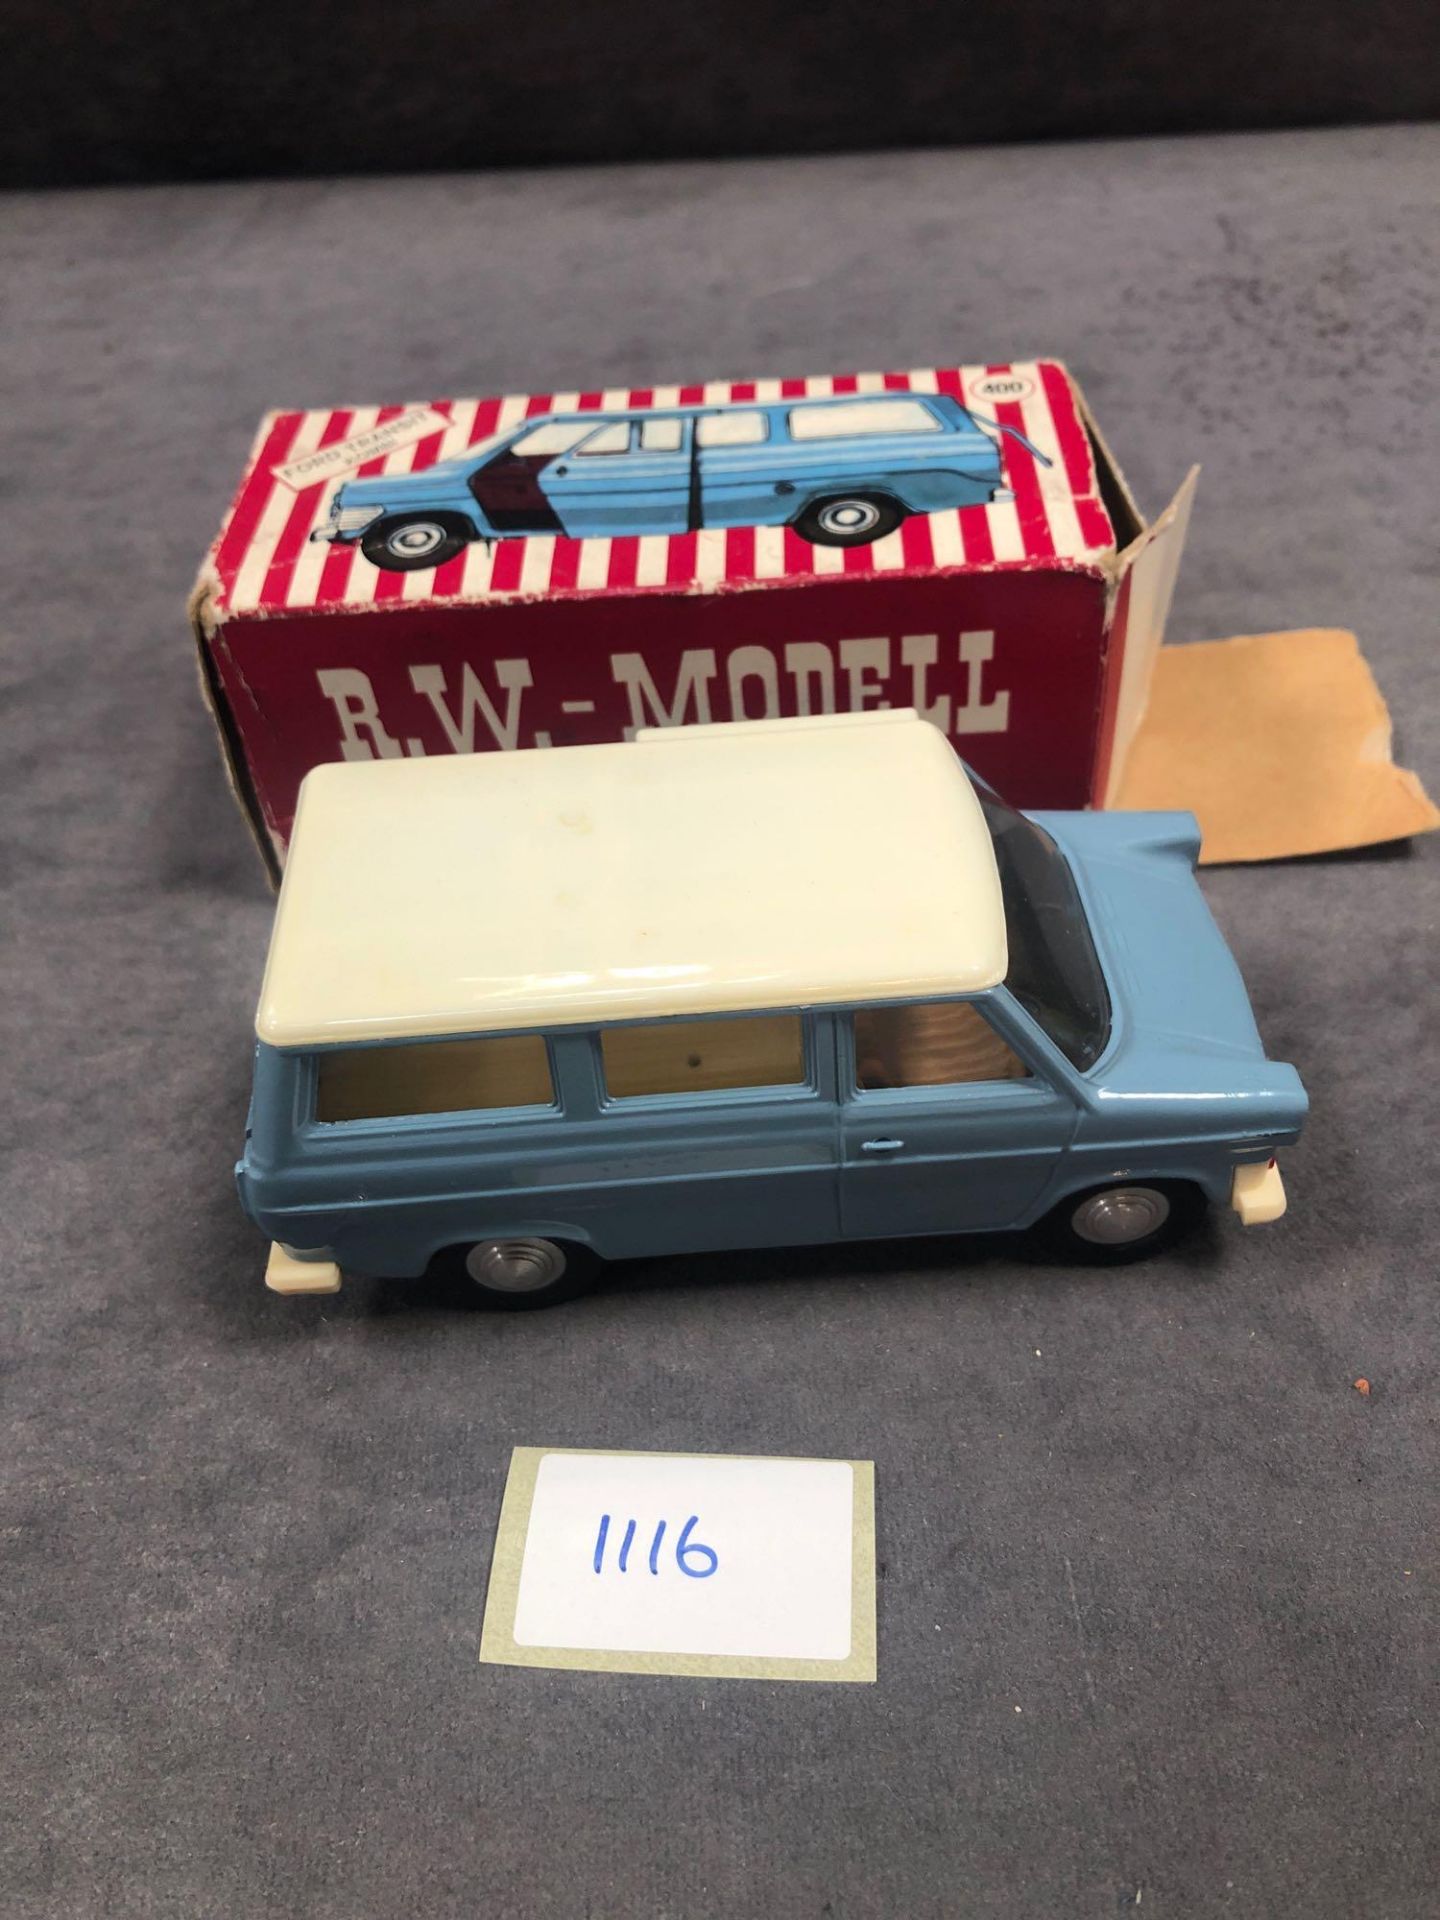 R.W.-Modell (Germany) #400 Ford Transit Kombi In Box